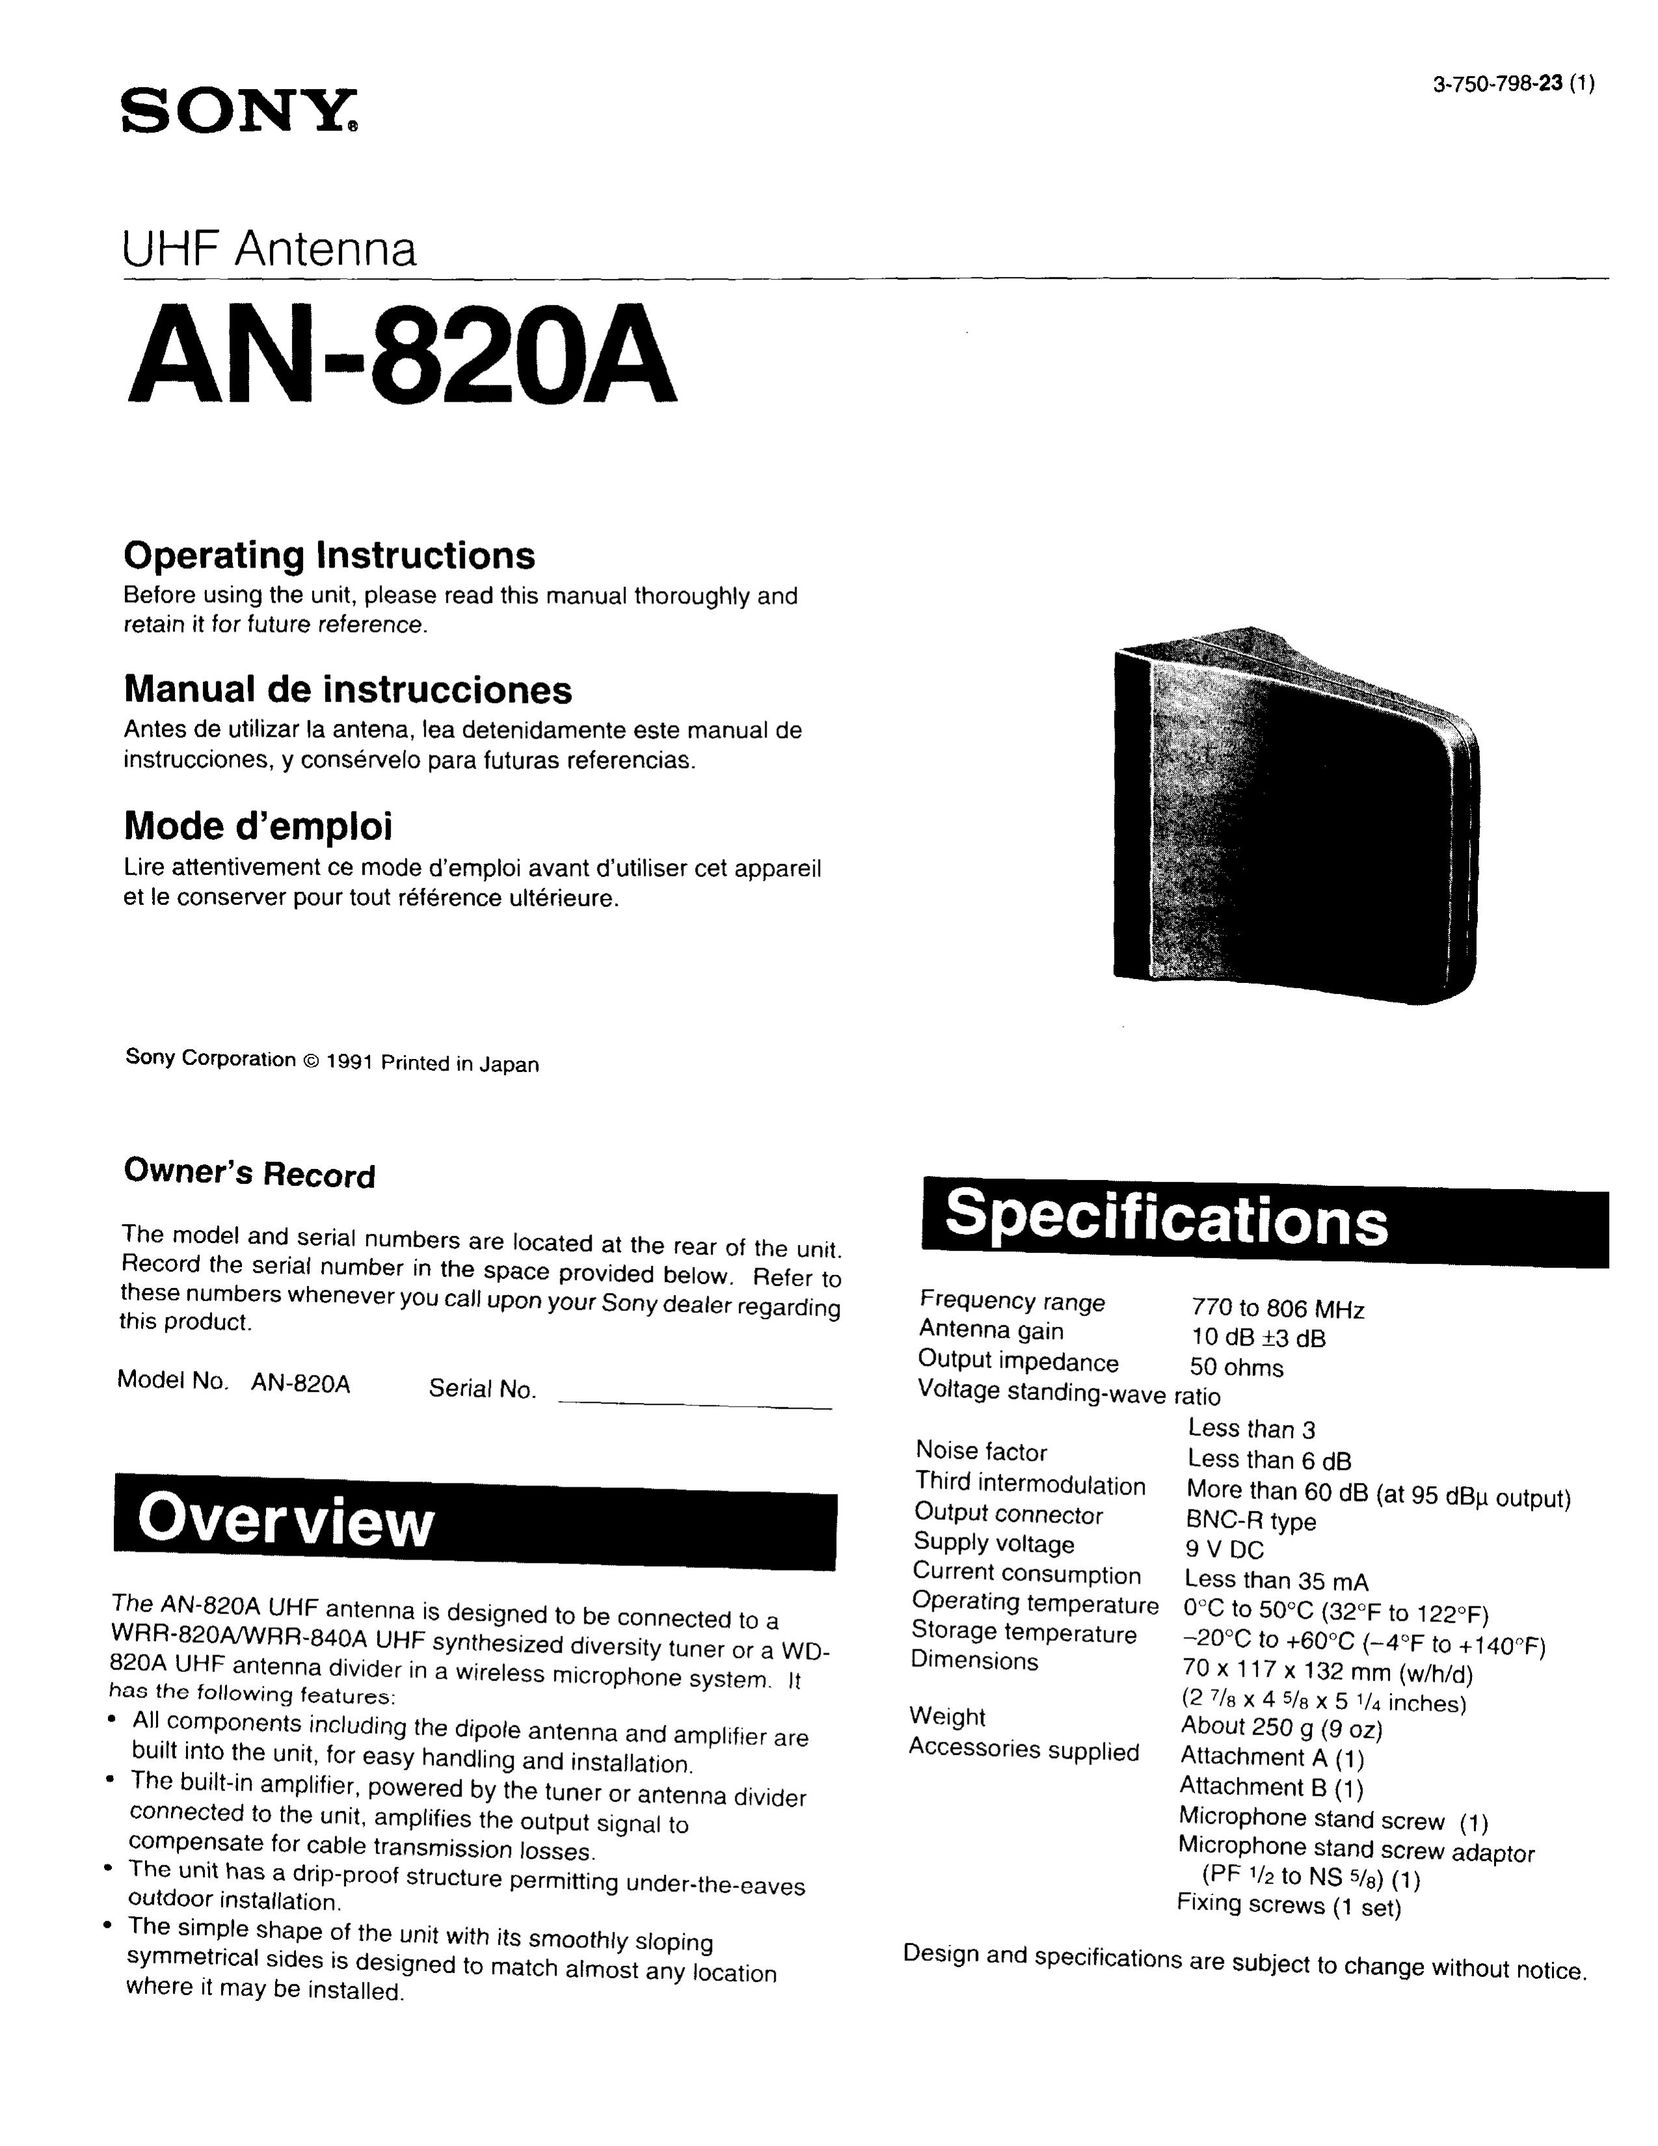 Sony AN-820A TV Antenna User Manual